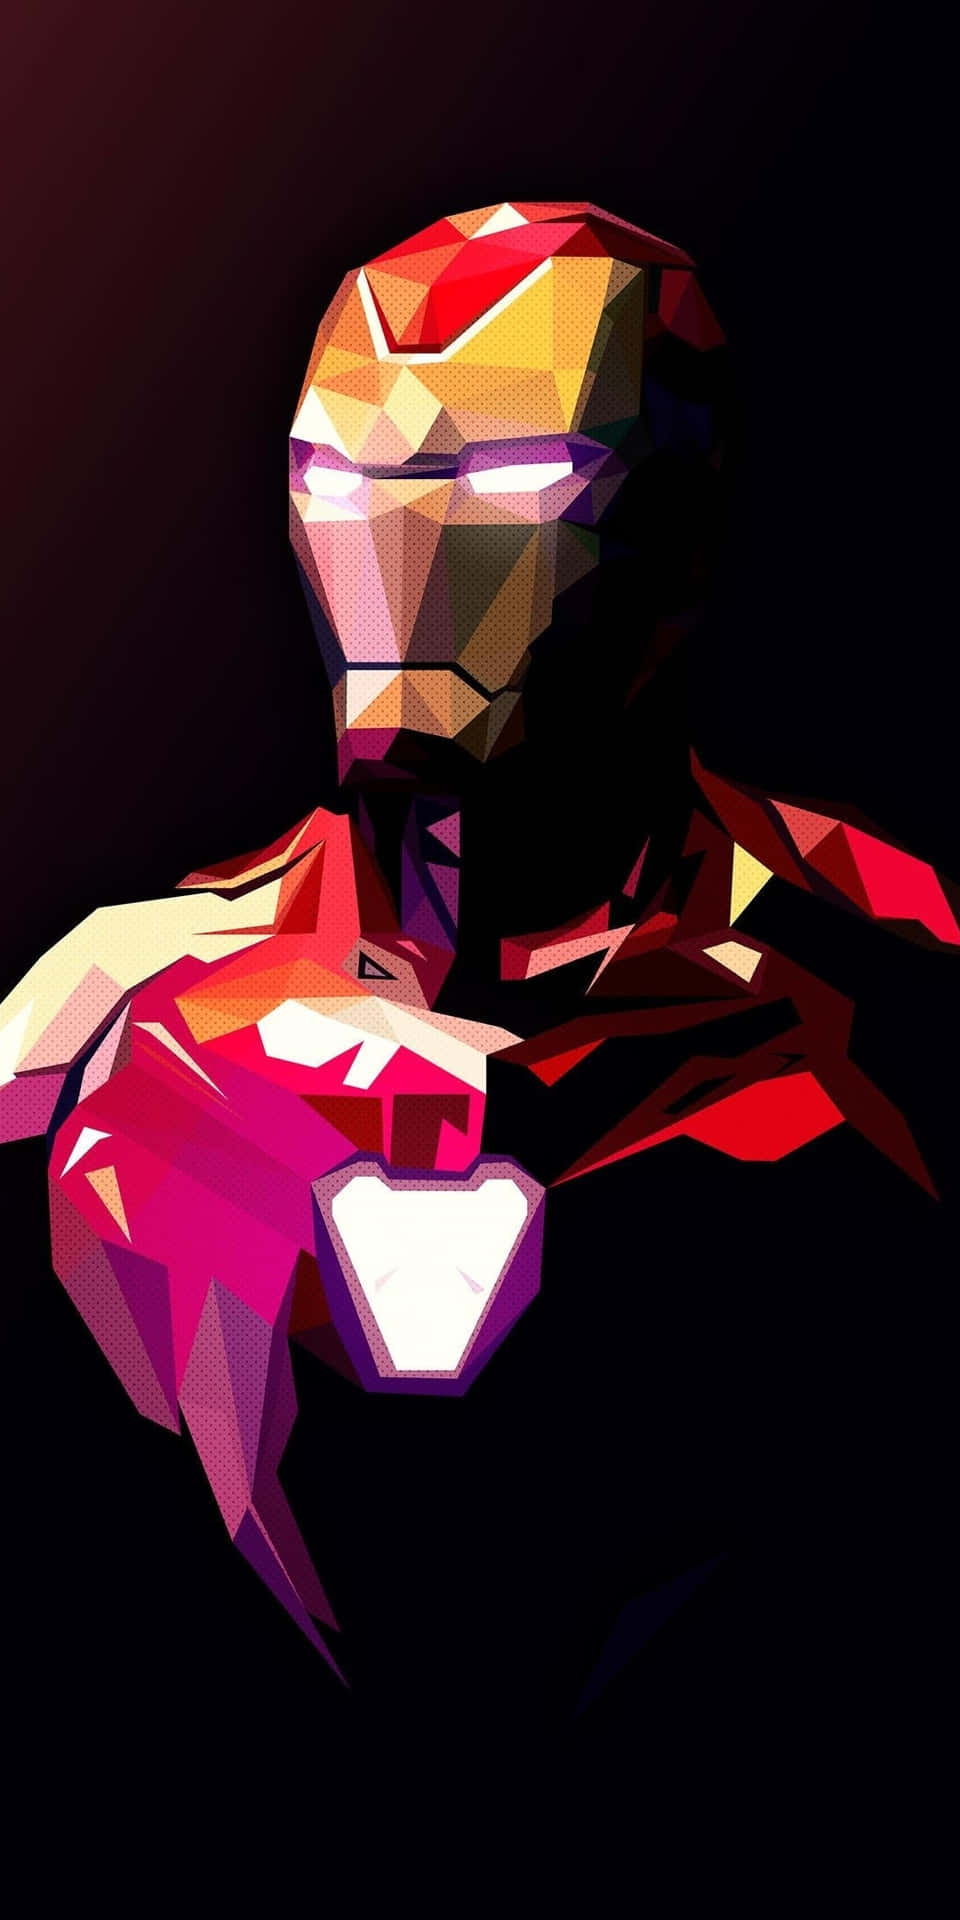 Fondode Pantalla Del Pixel 3 De Iron Man En Estilo Poligonal.